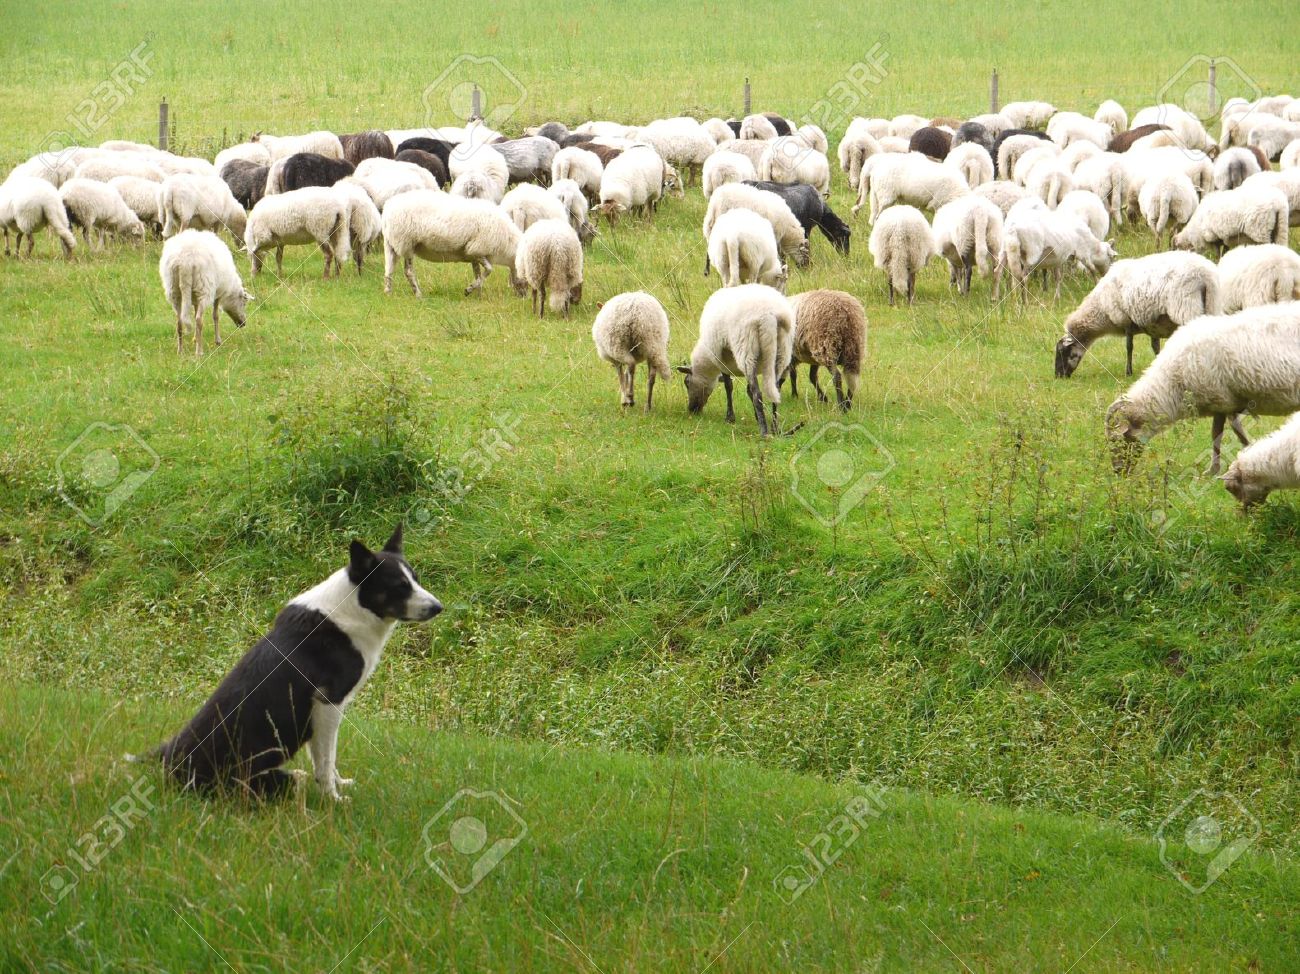 11912328-a-shepherd-dog-and-his-sheep.jpg